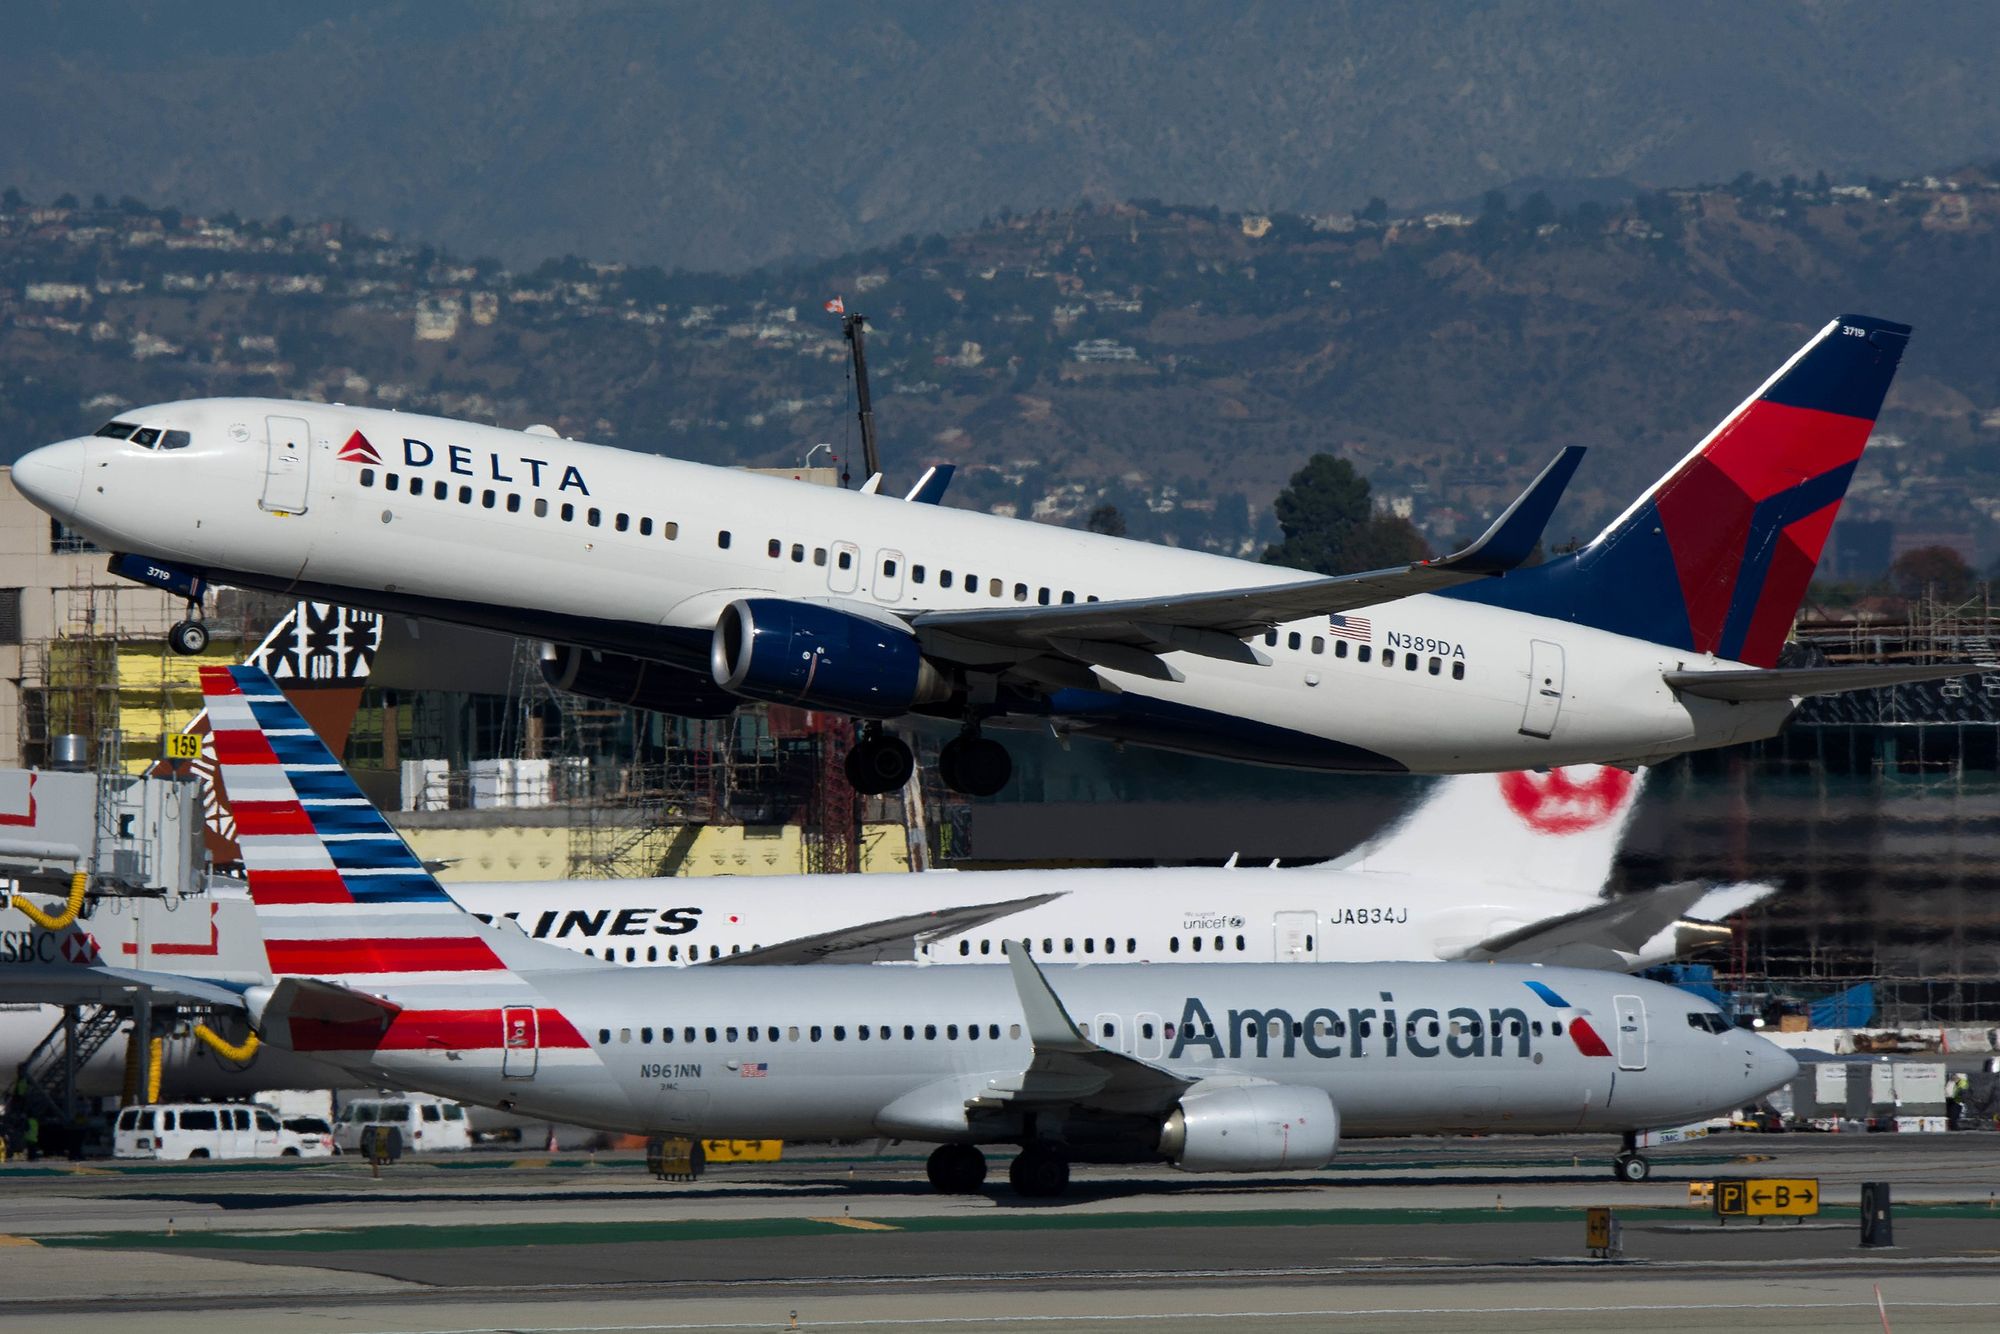                      American vs Delta vs United: Who Has the Best Flight Experience?                             
                     